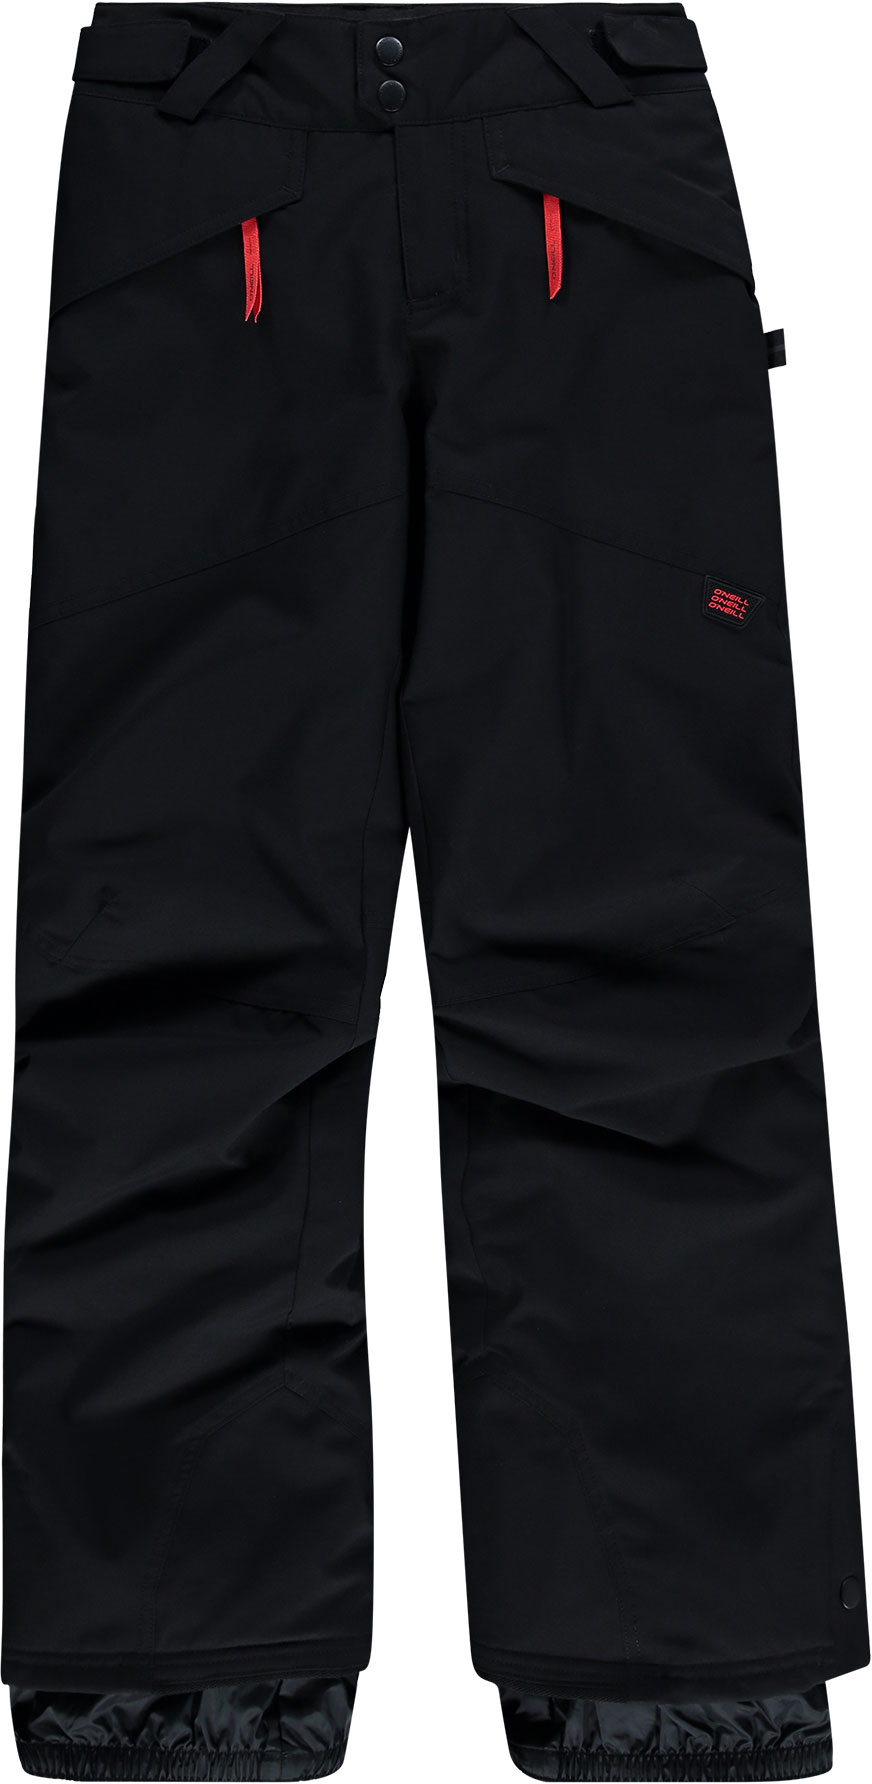 Boys’ ski/snowboarding trousers